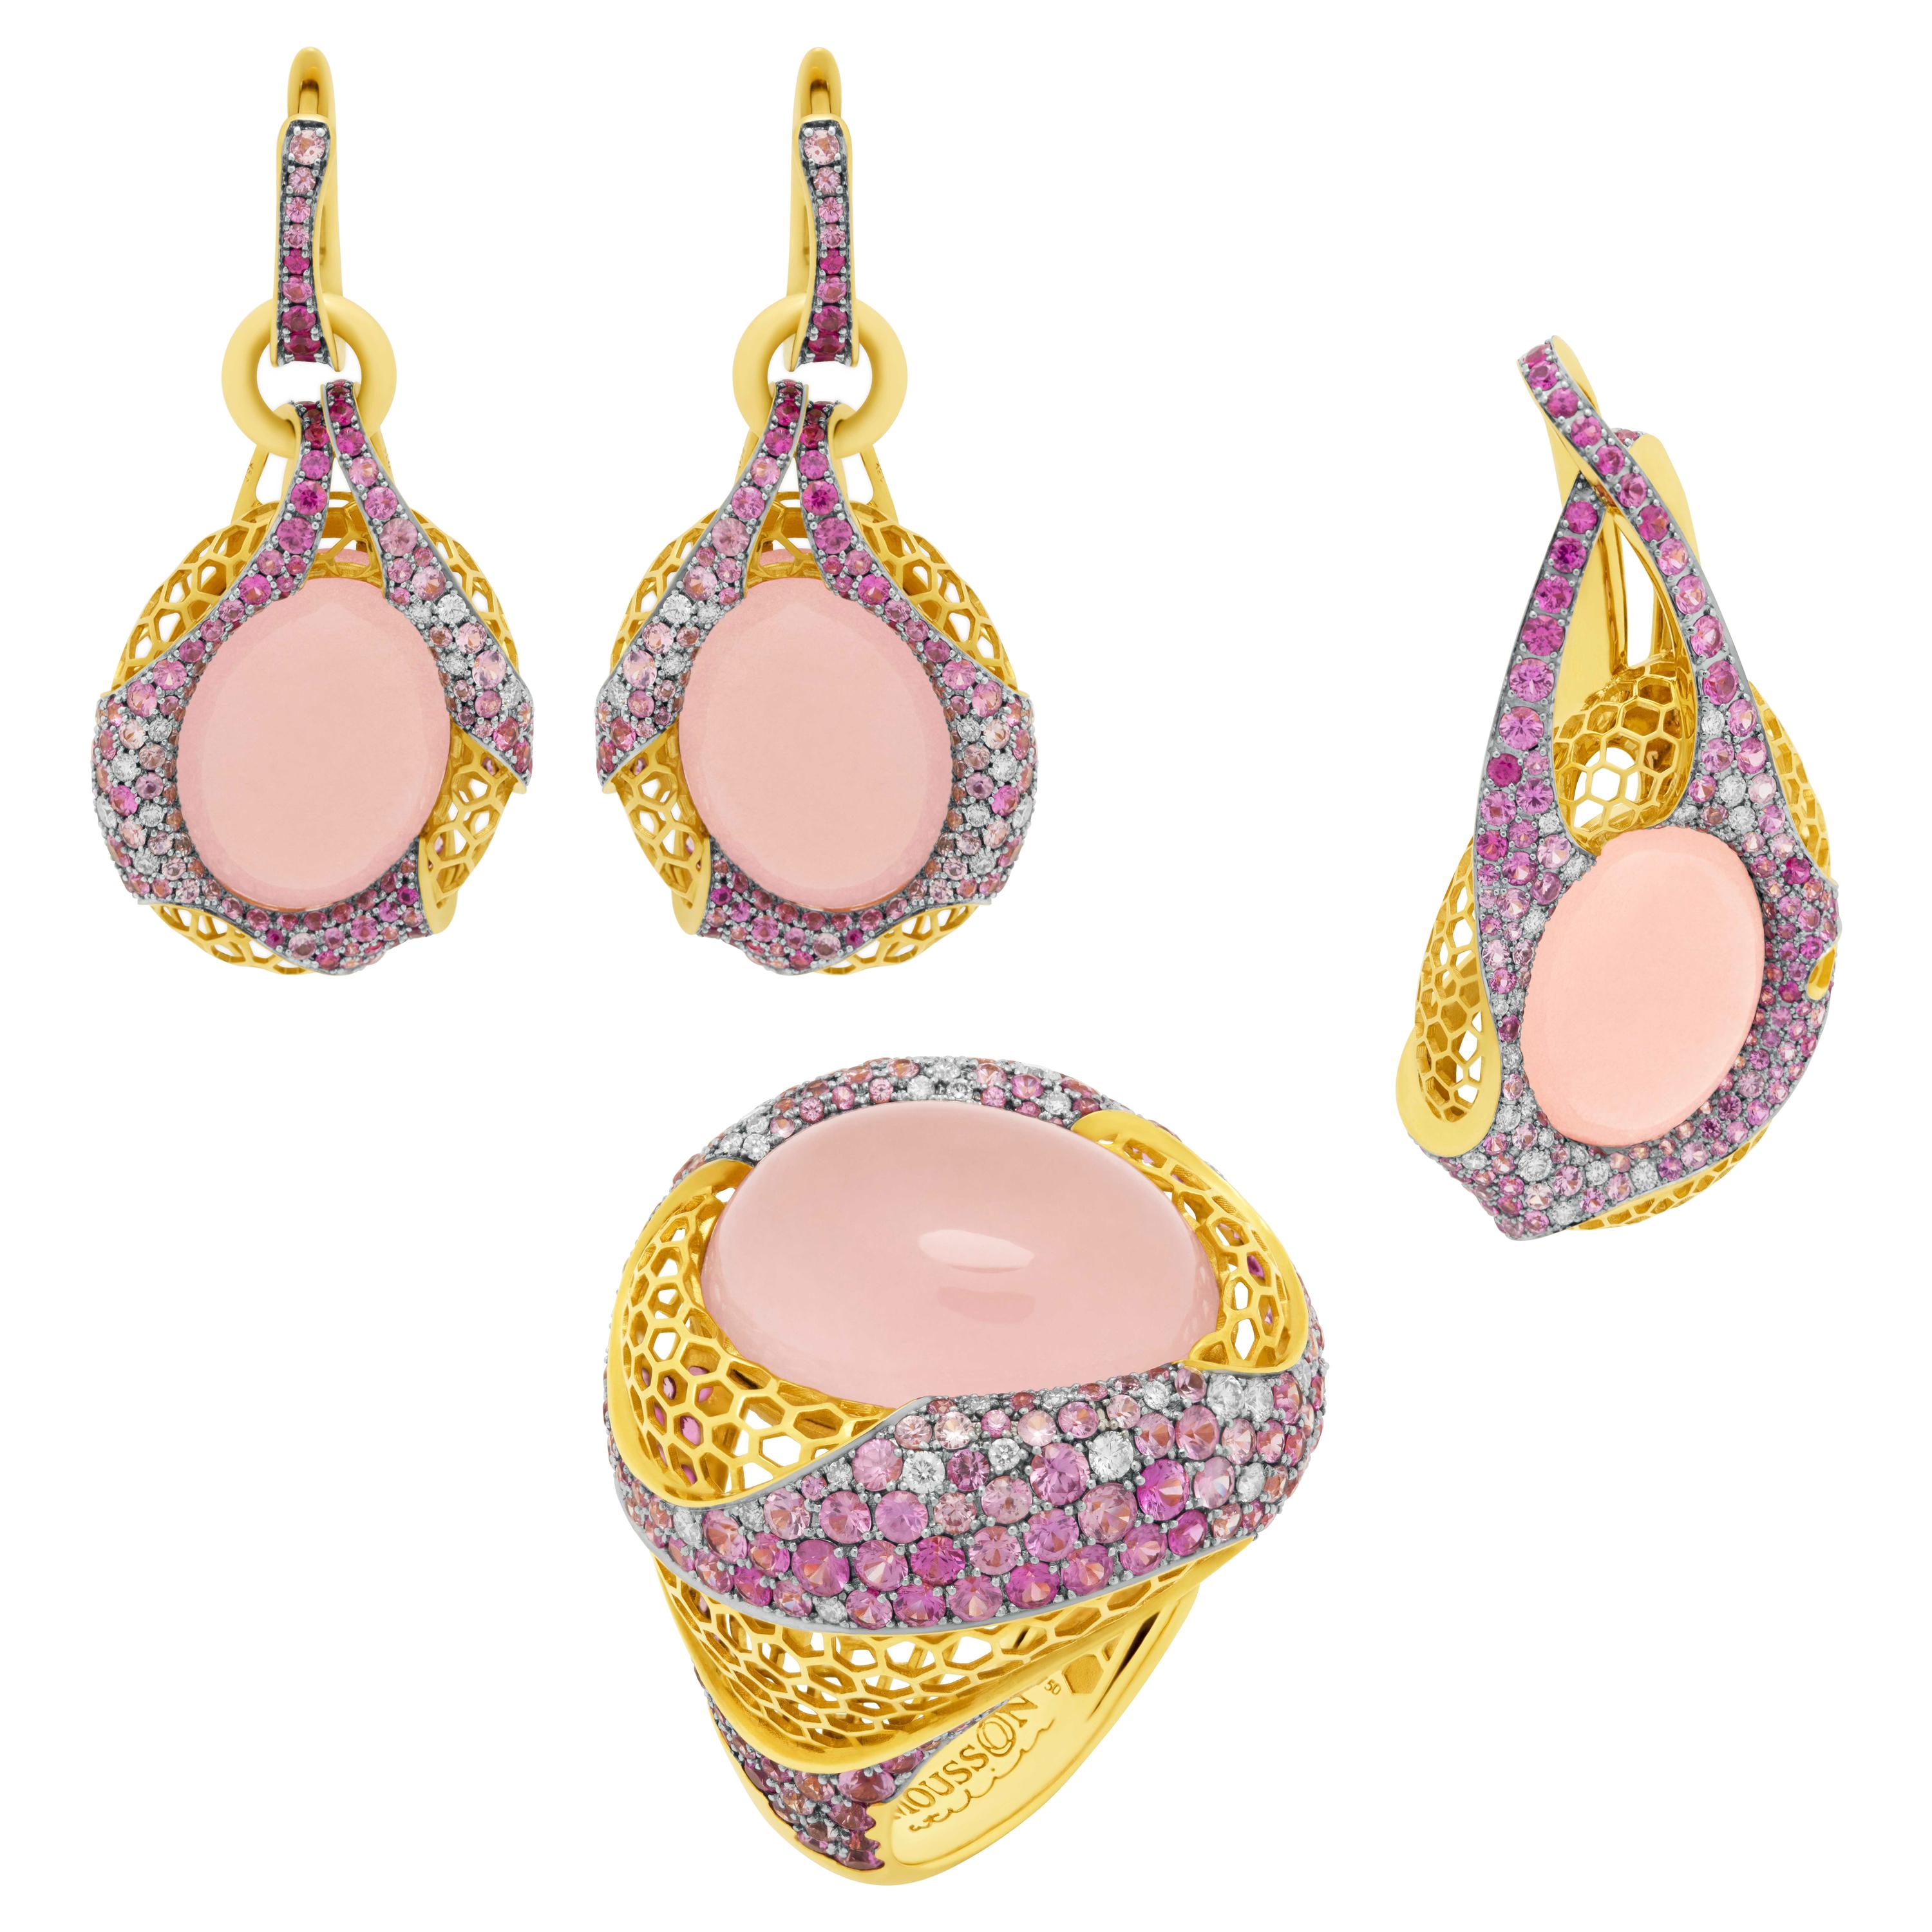 Parure en or jaune 18 carats avec quartz rose, diamants et saphirs roses